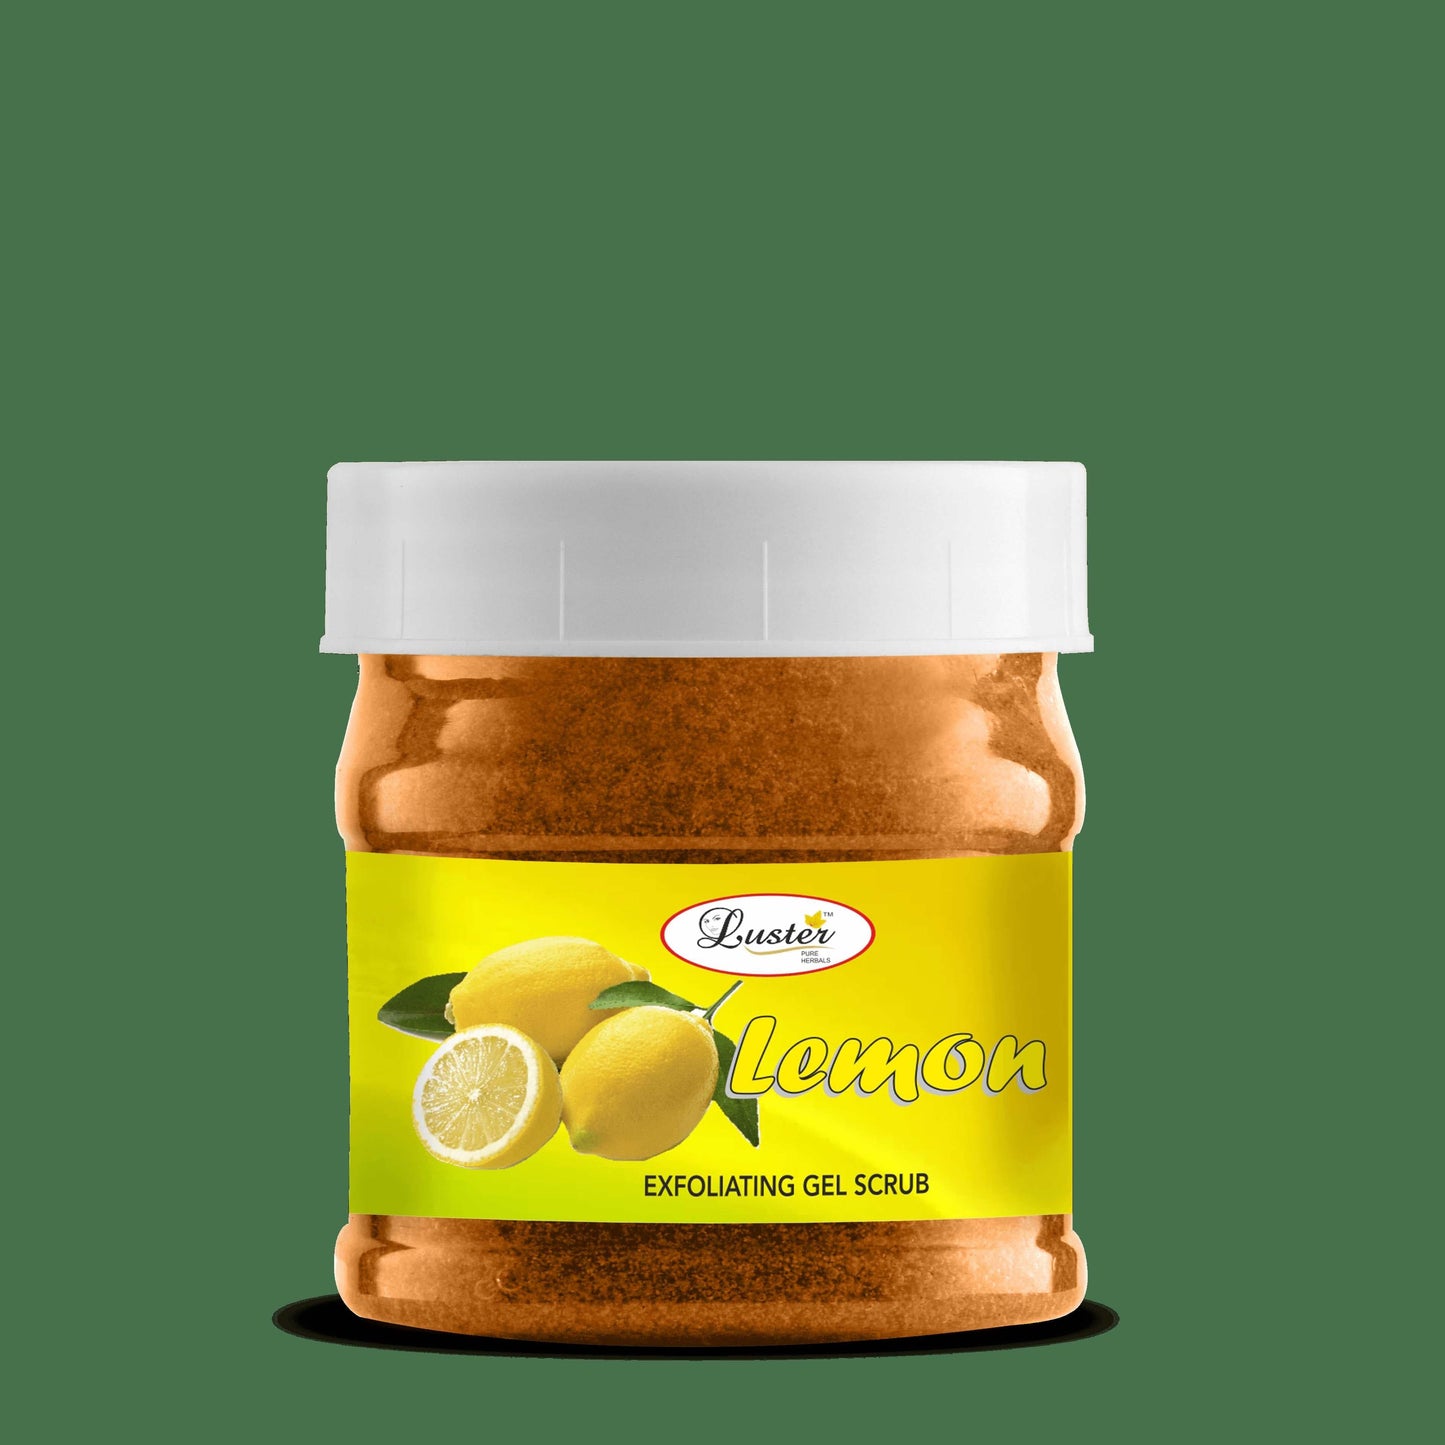 Luster Lemon Face & Body Gel Scrub (Paraben & Sulfate Free)-500 ml.